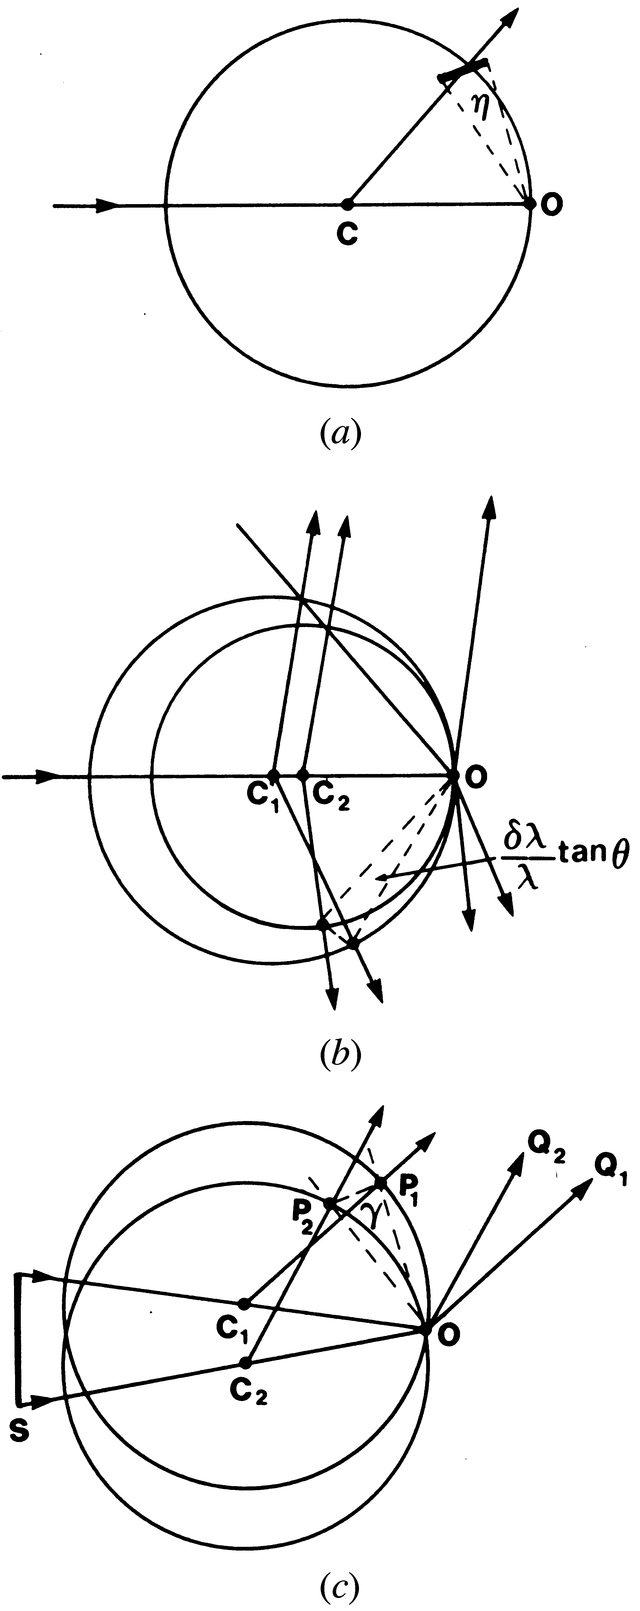 [Figure 2.2.7.1]